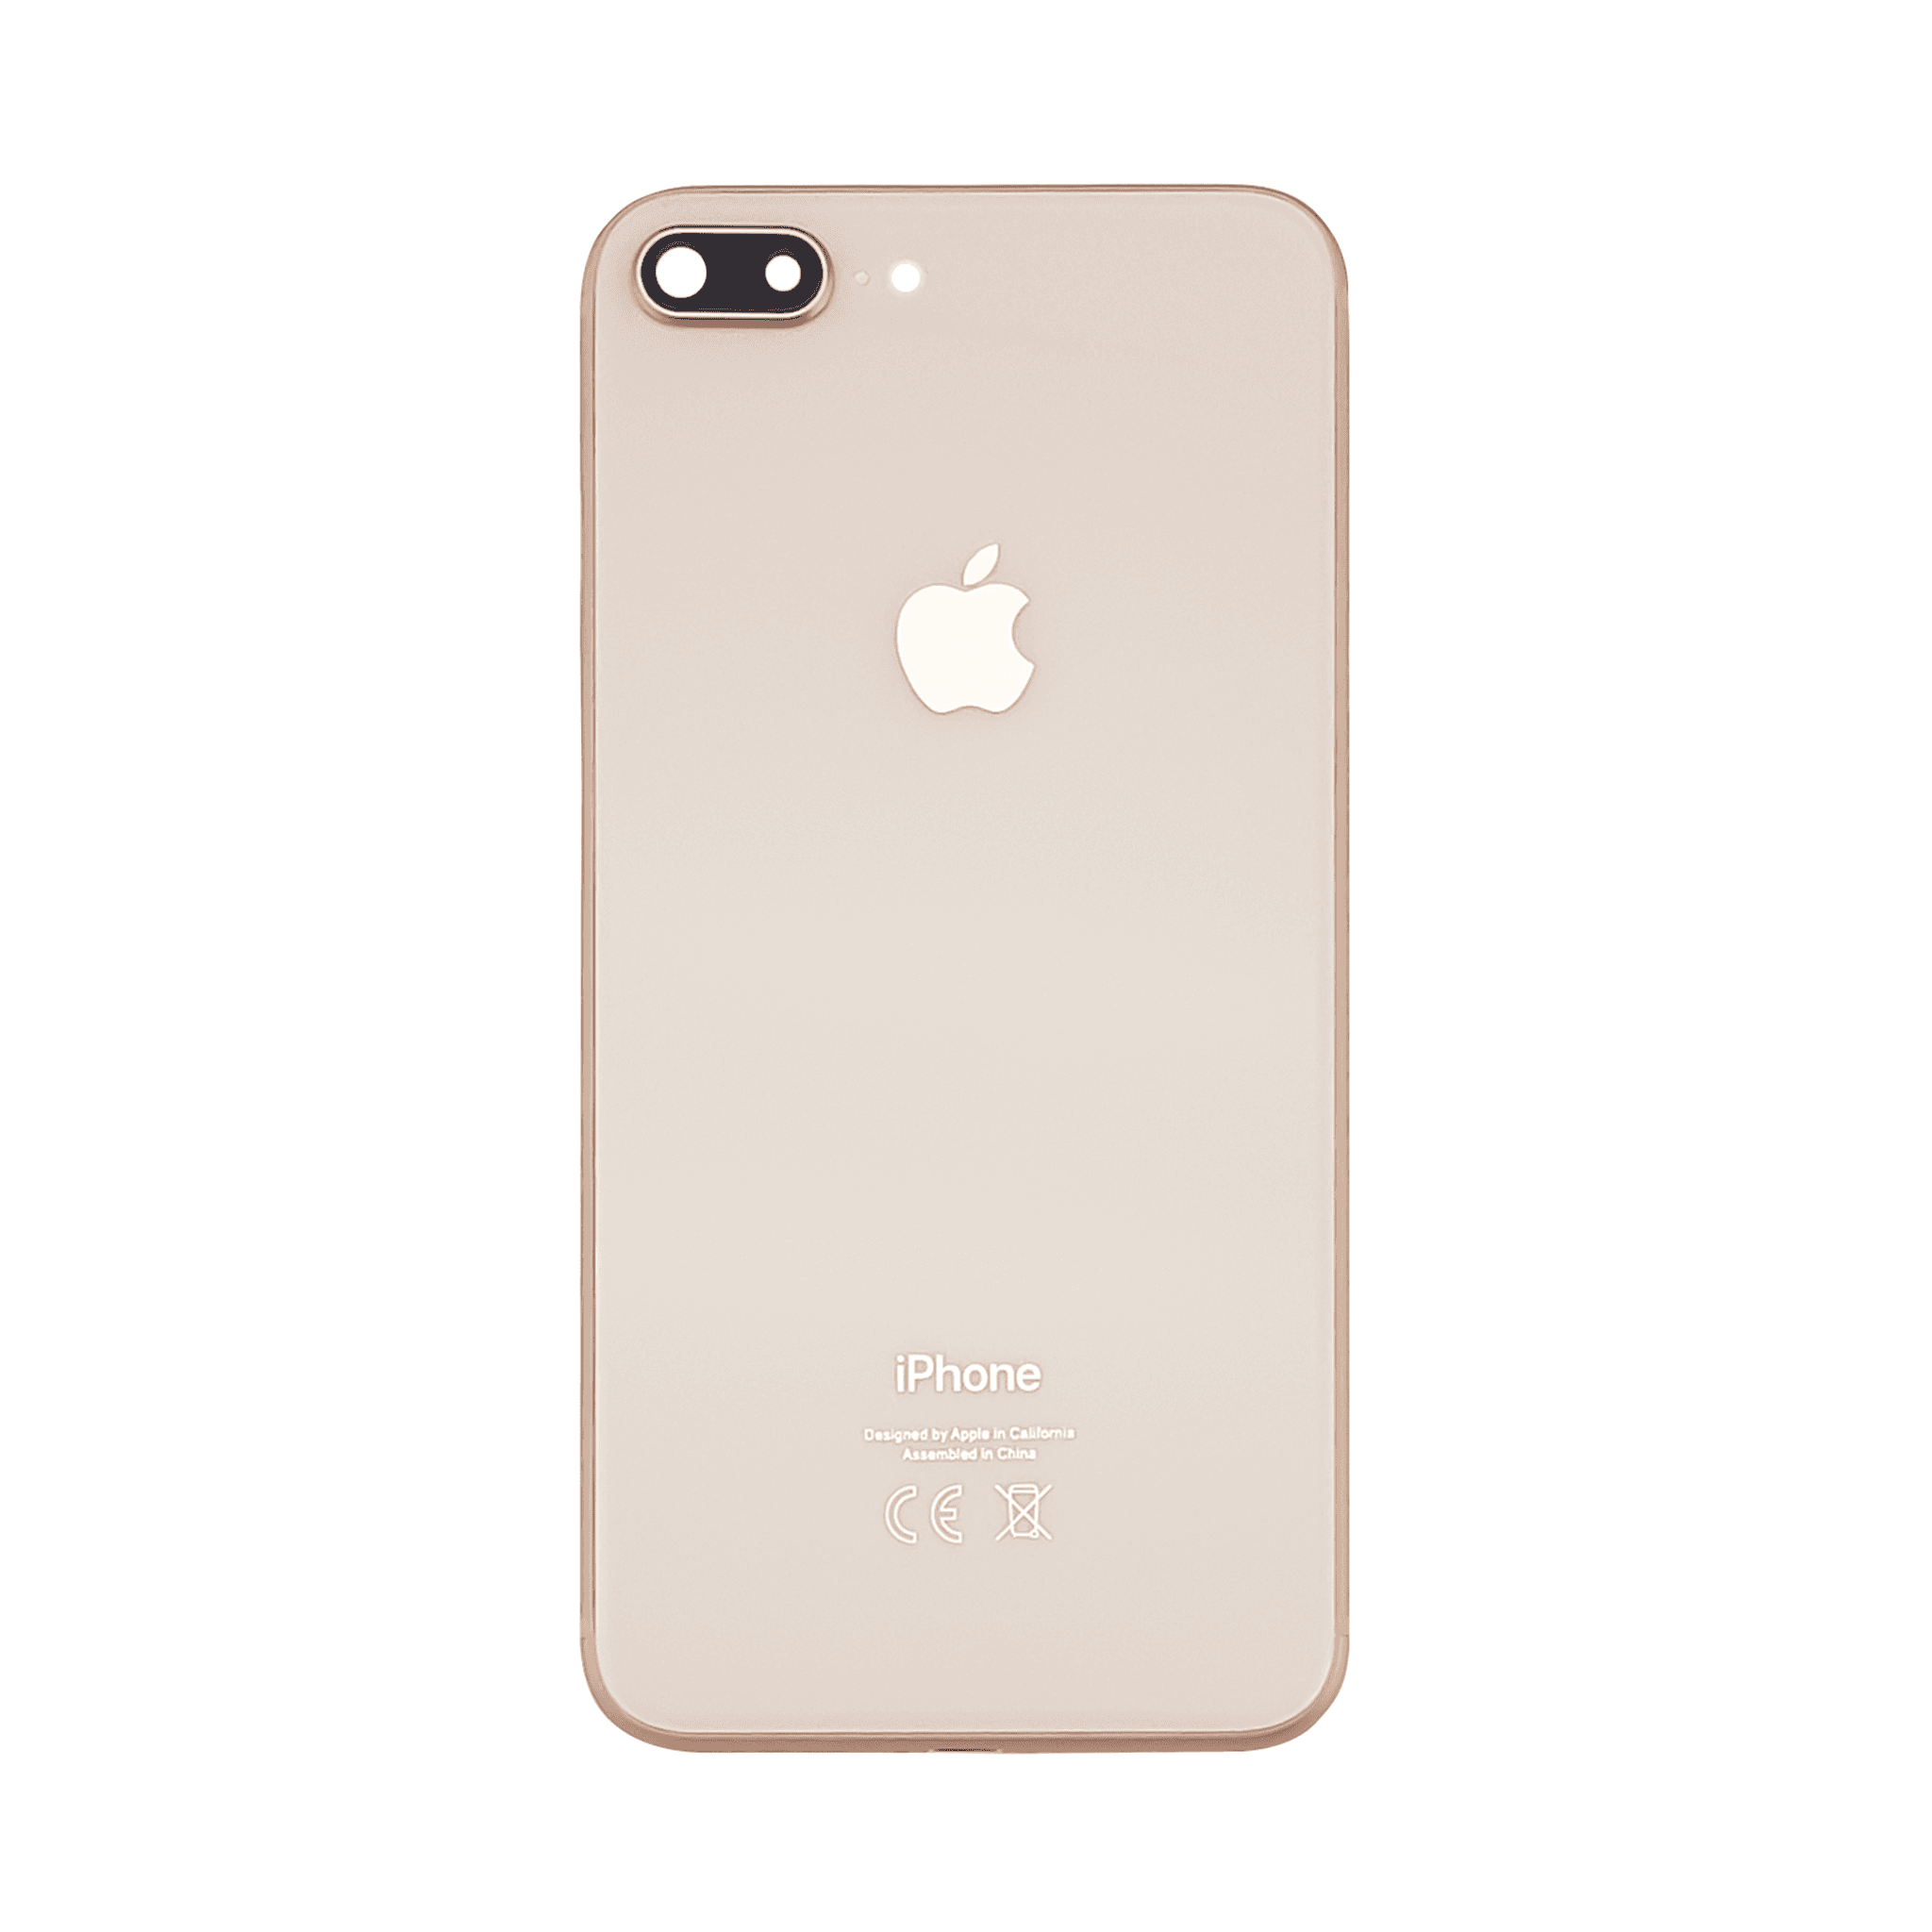 Korpus + kryt baterie iPhone 8 plus zlato - růžový